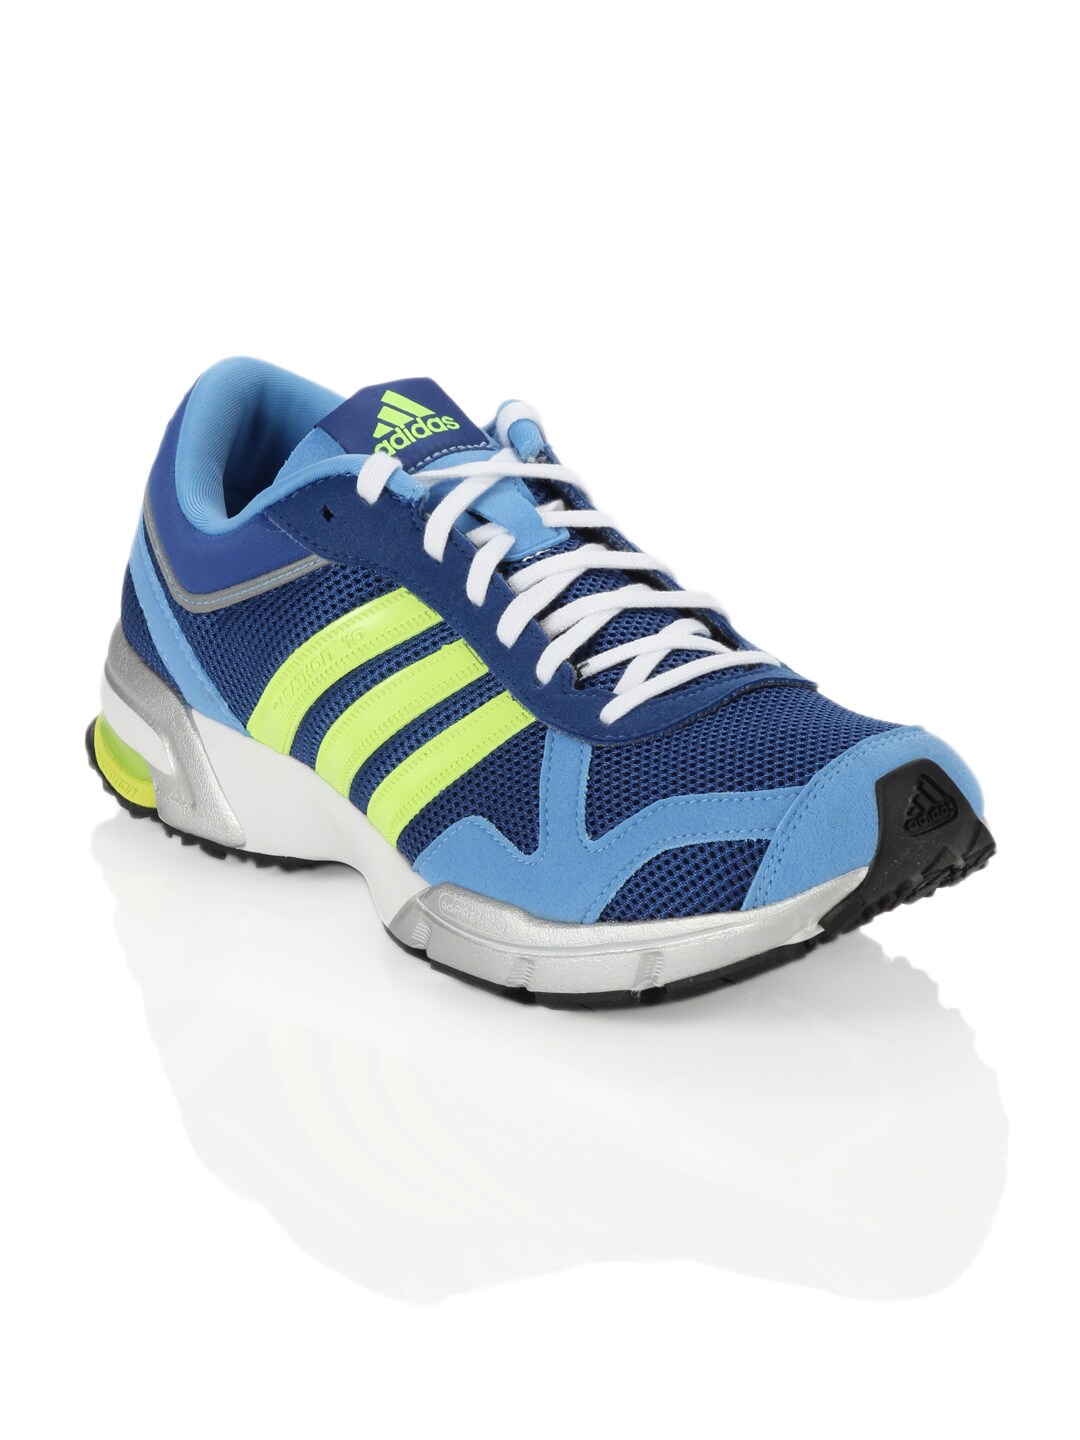 ADIDAS Men Marathon Blue Sports Shoes